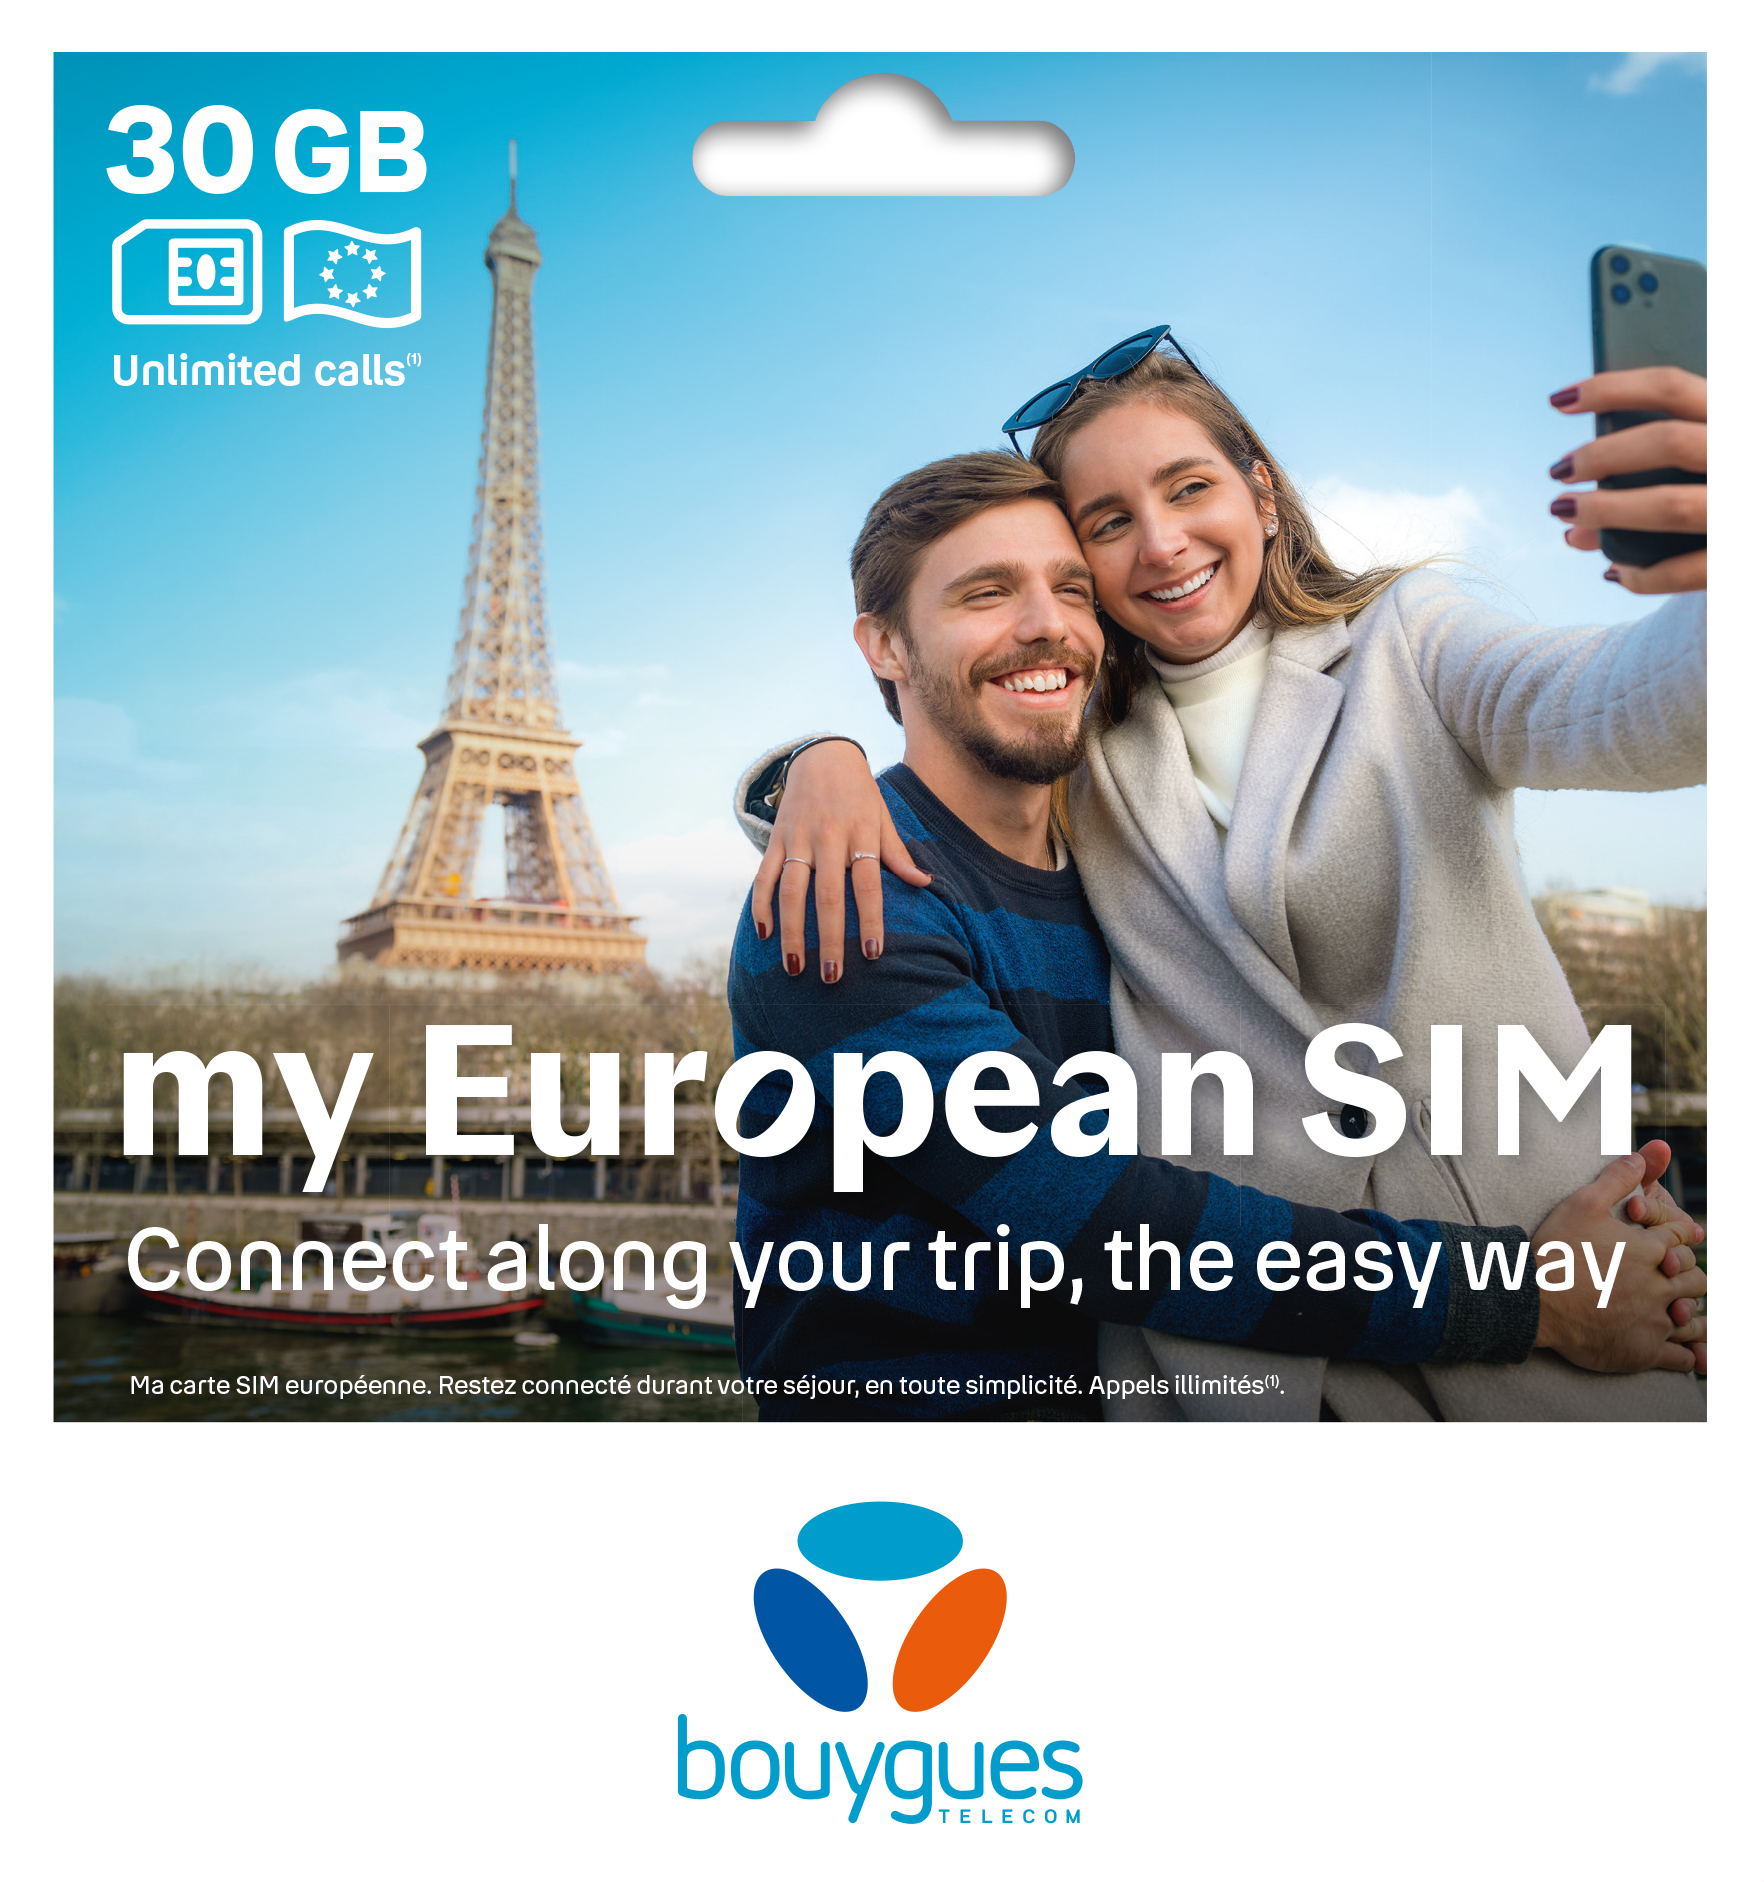 https://www.ingenicoprepaid.com/wp-content/uploads/2019/11/Packaging-My-European-SIM-30-GB.jpg